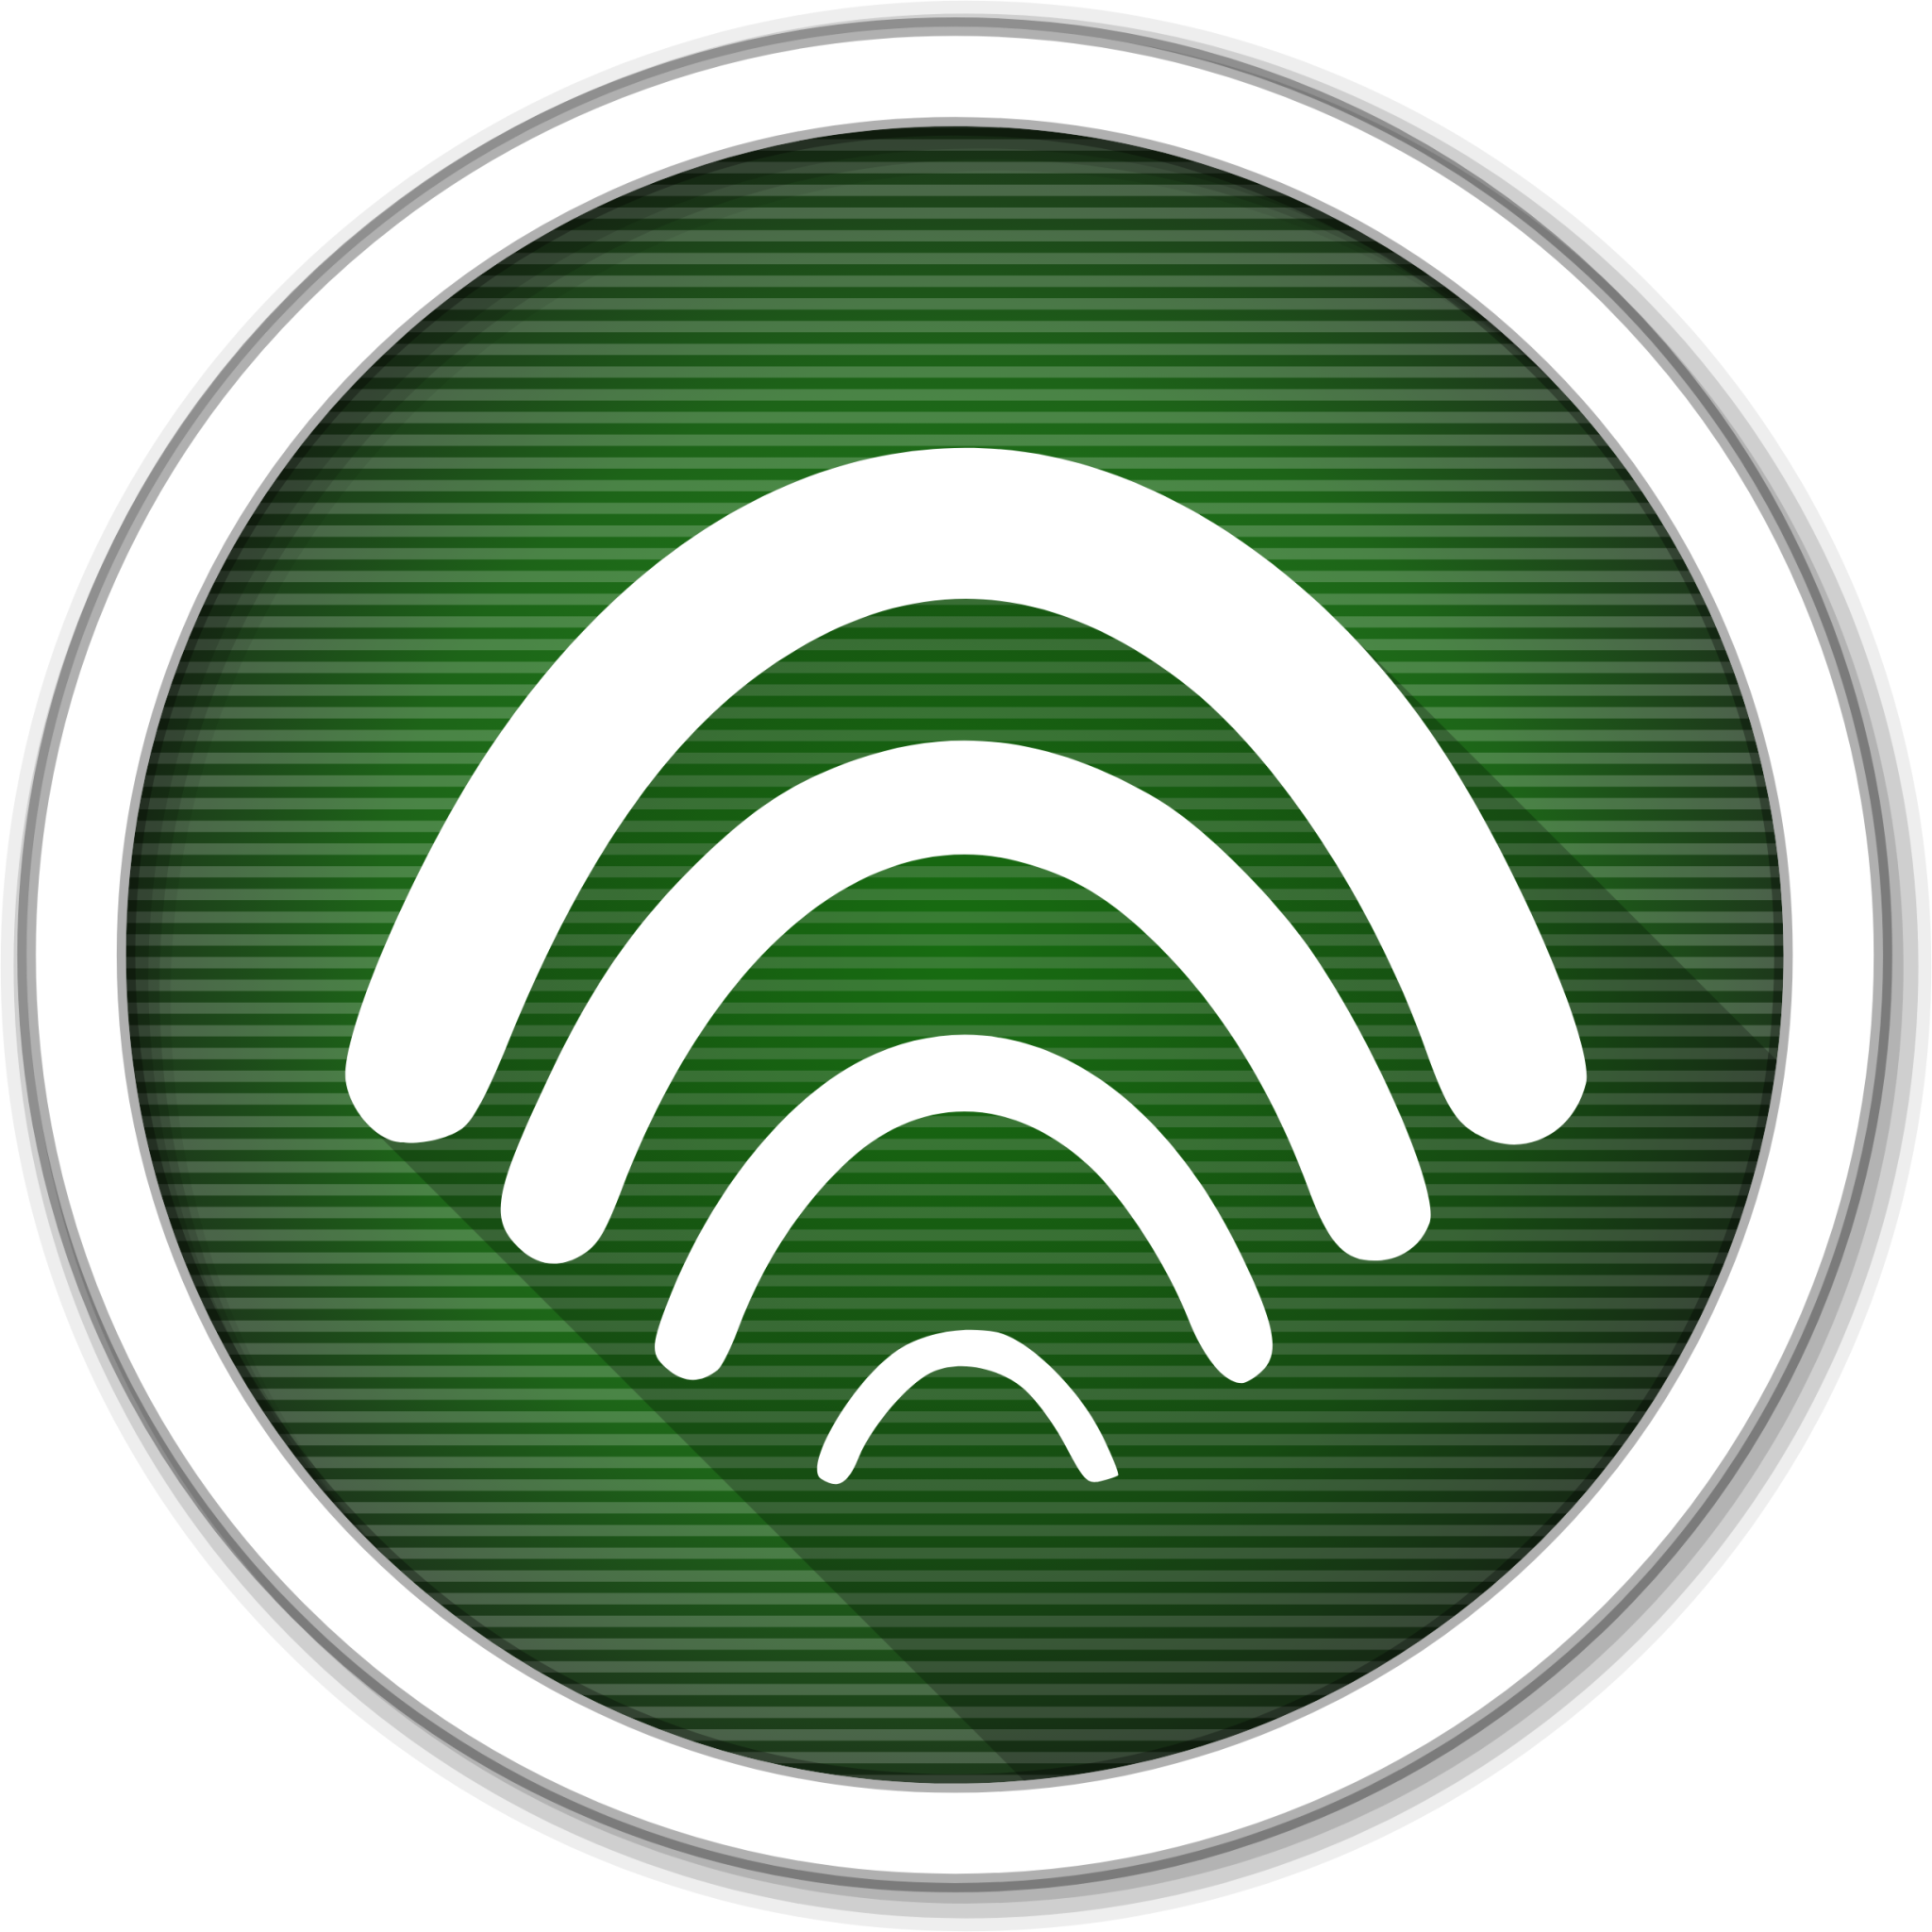 wifi radar icon